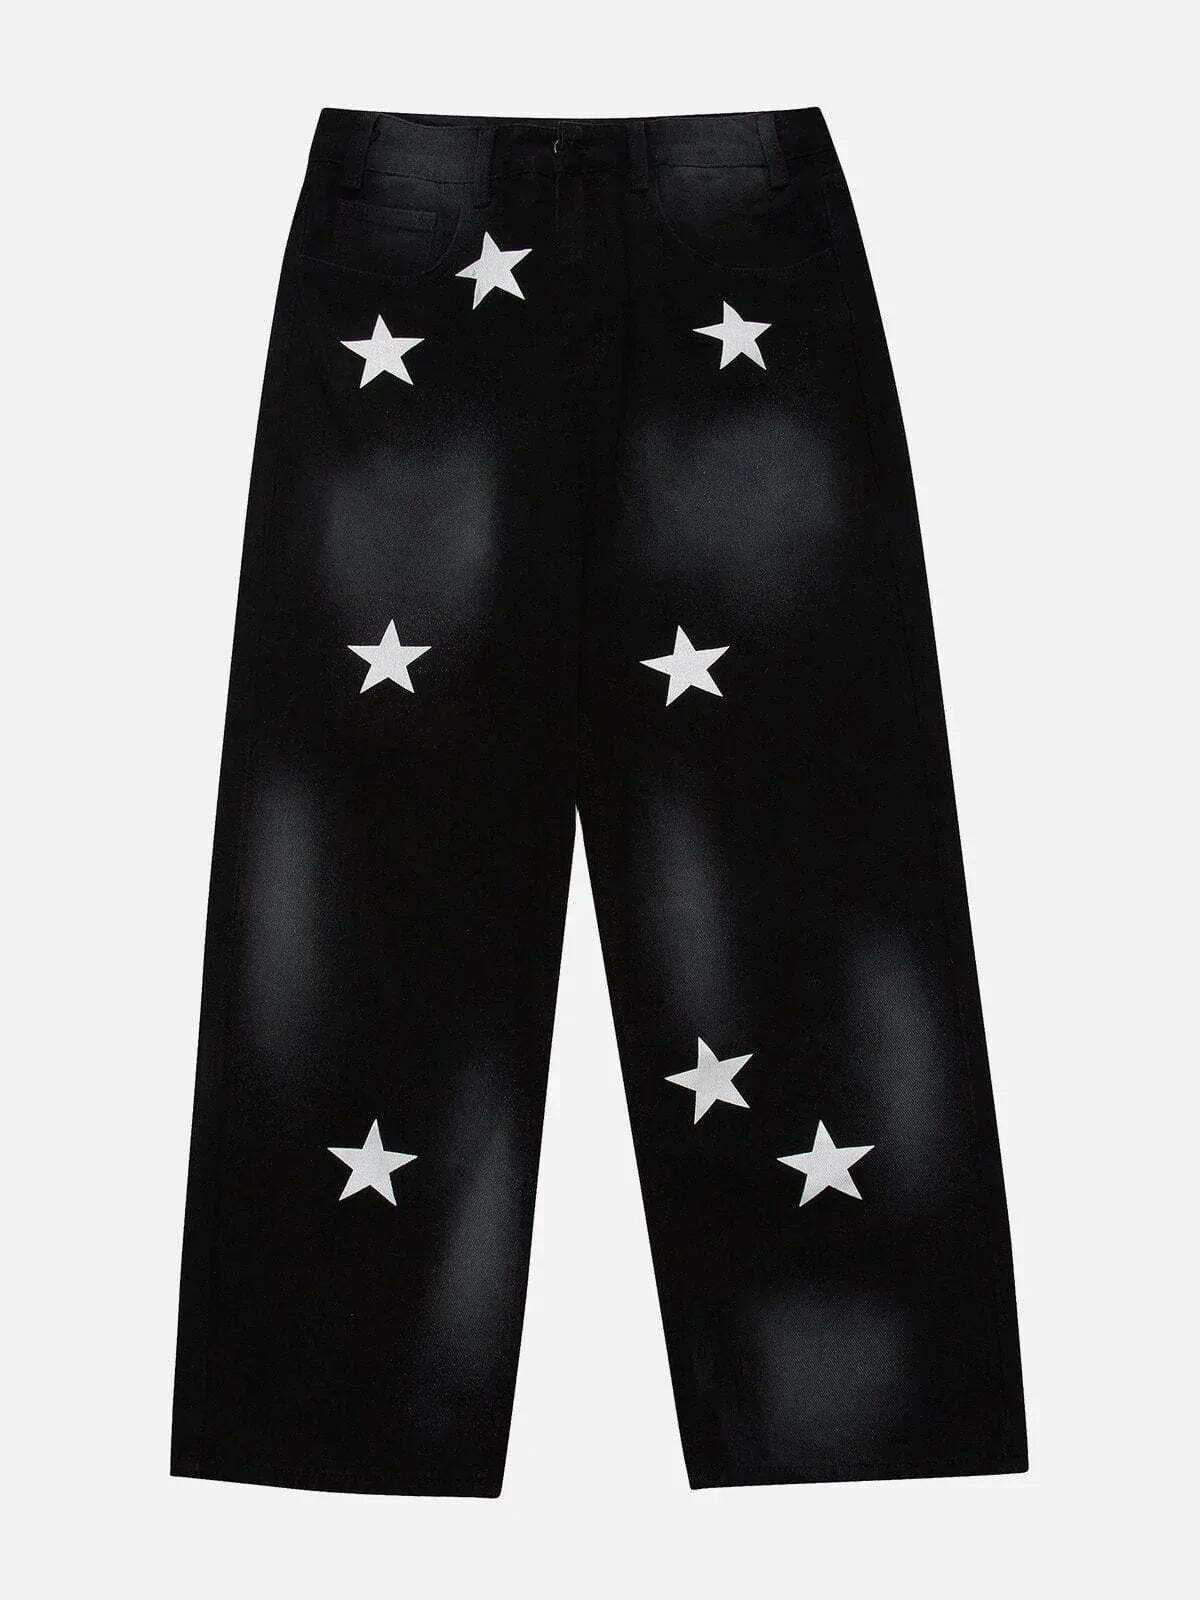 graphic pentagram jeans edgy & trendy streetwear 4841